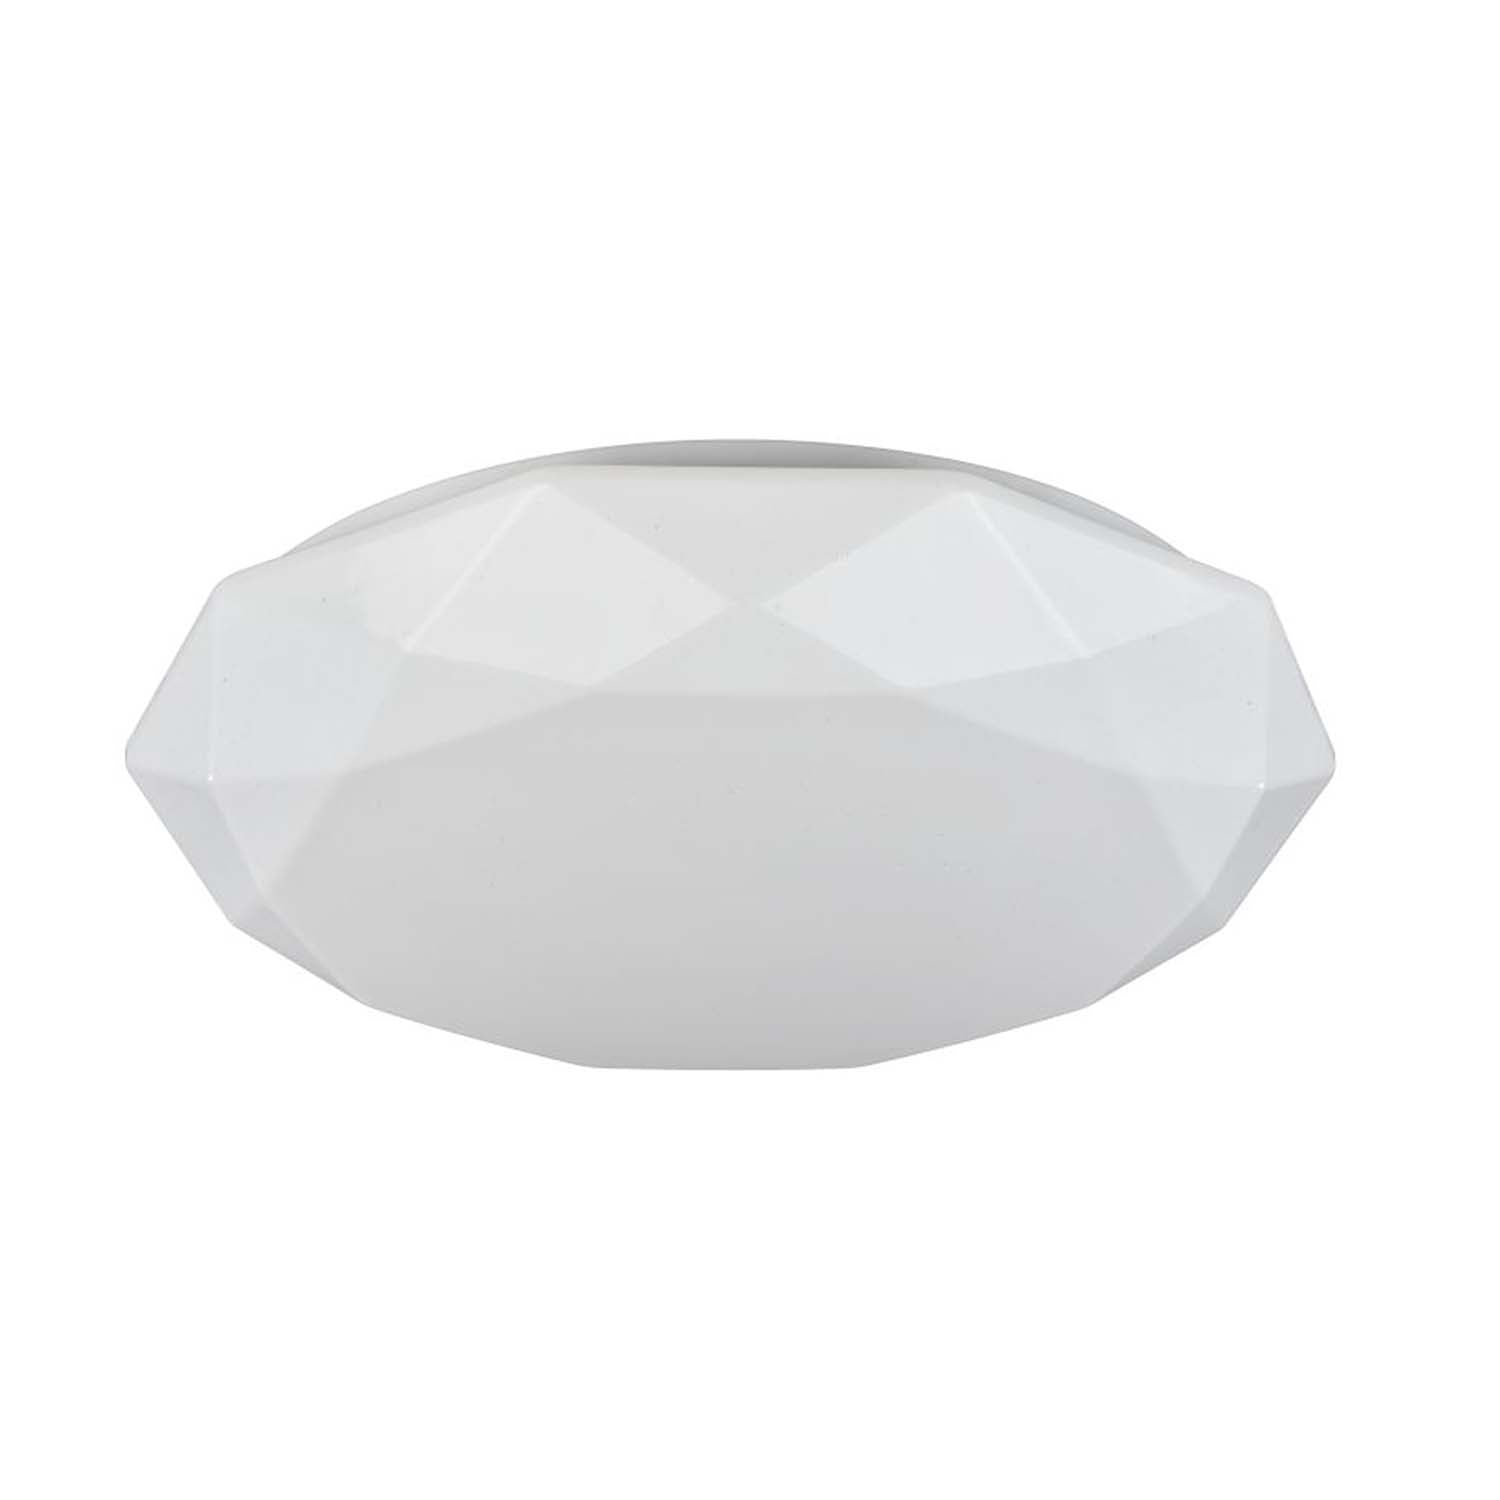 CRYSTALLIZE - White geometric designer acrylic ceiling light